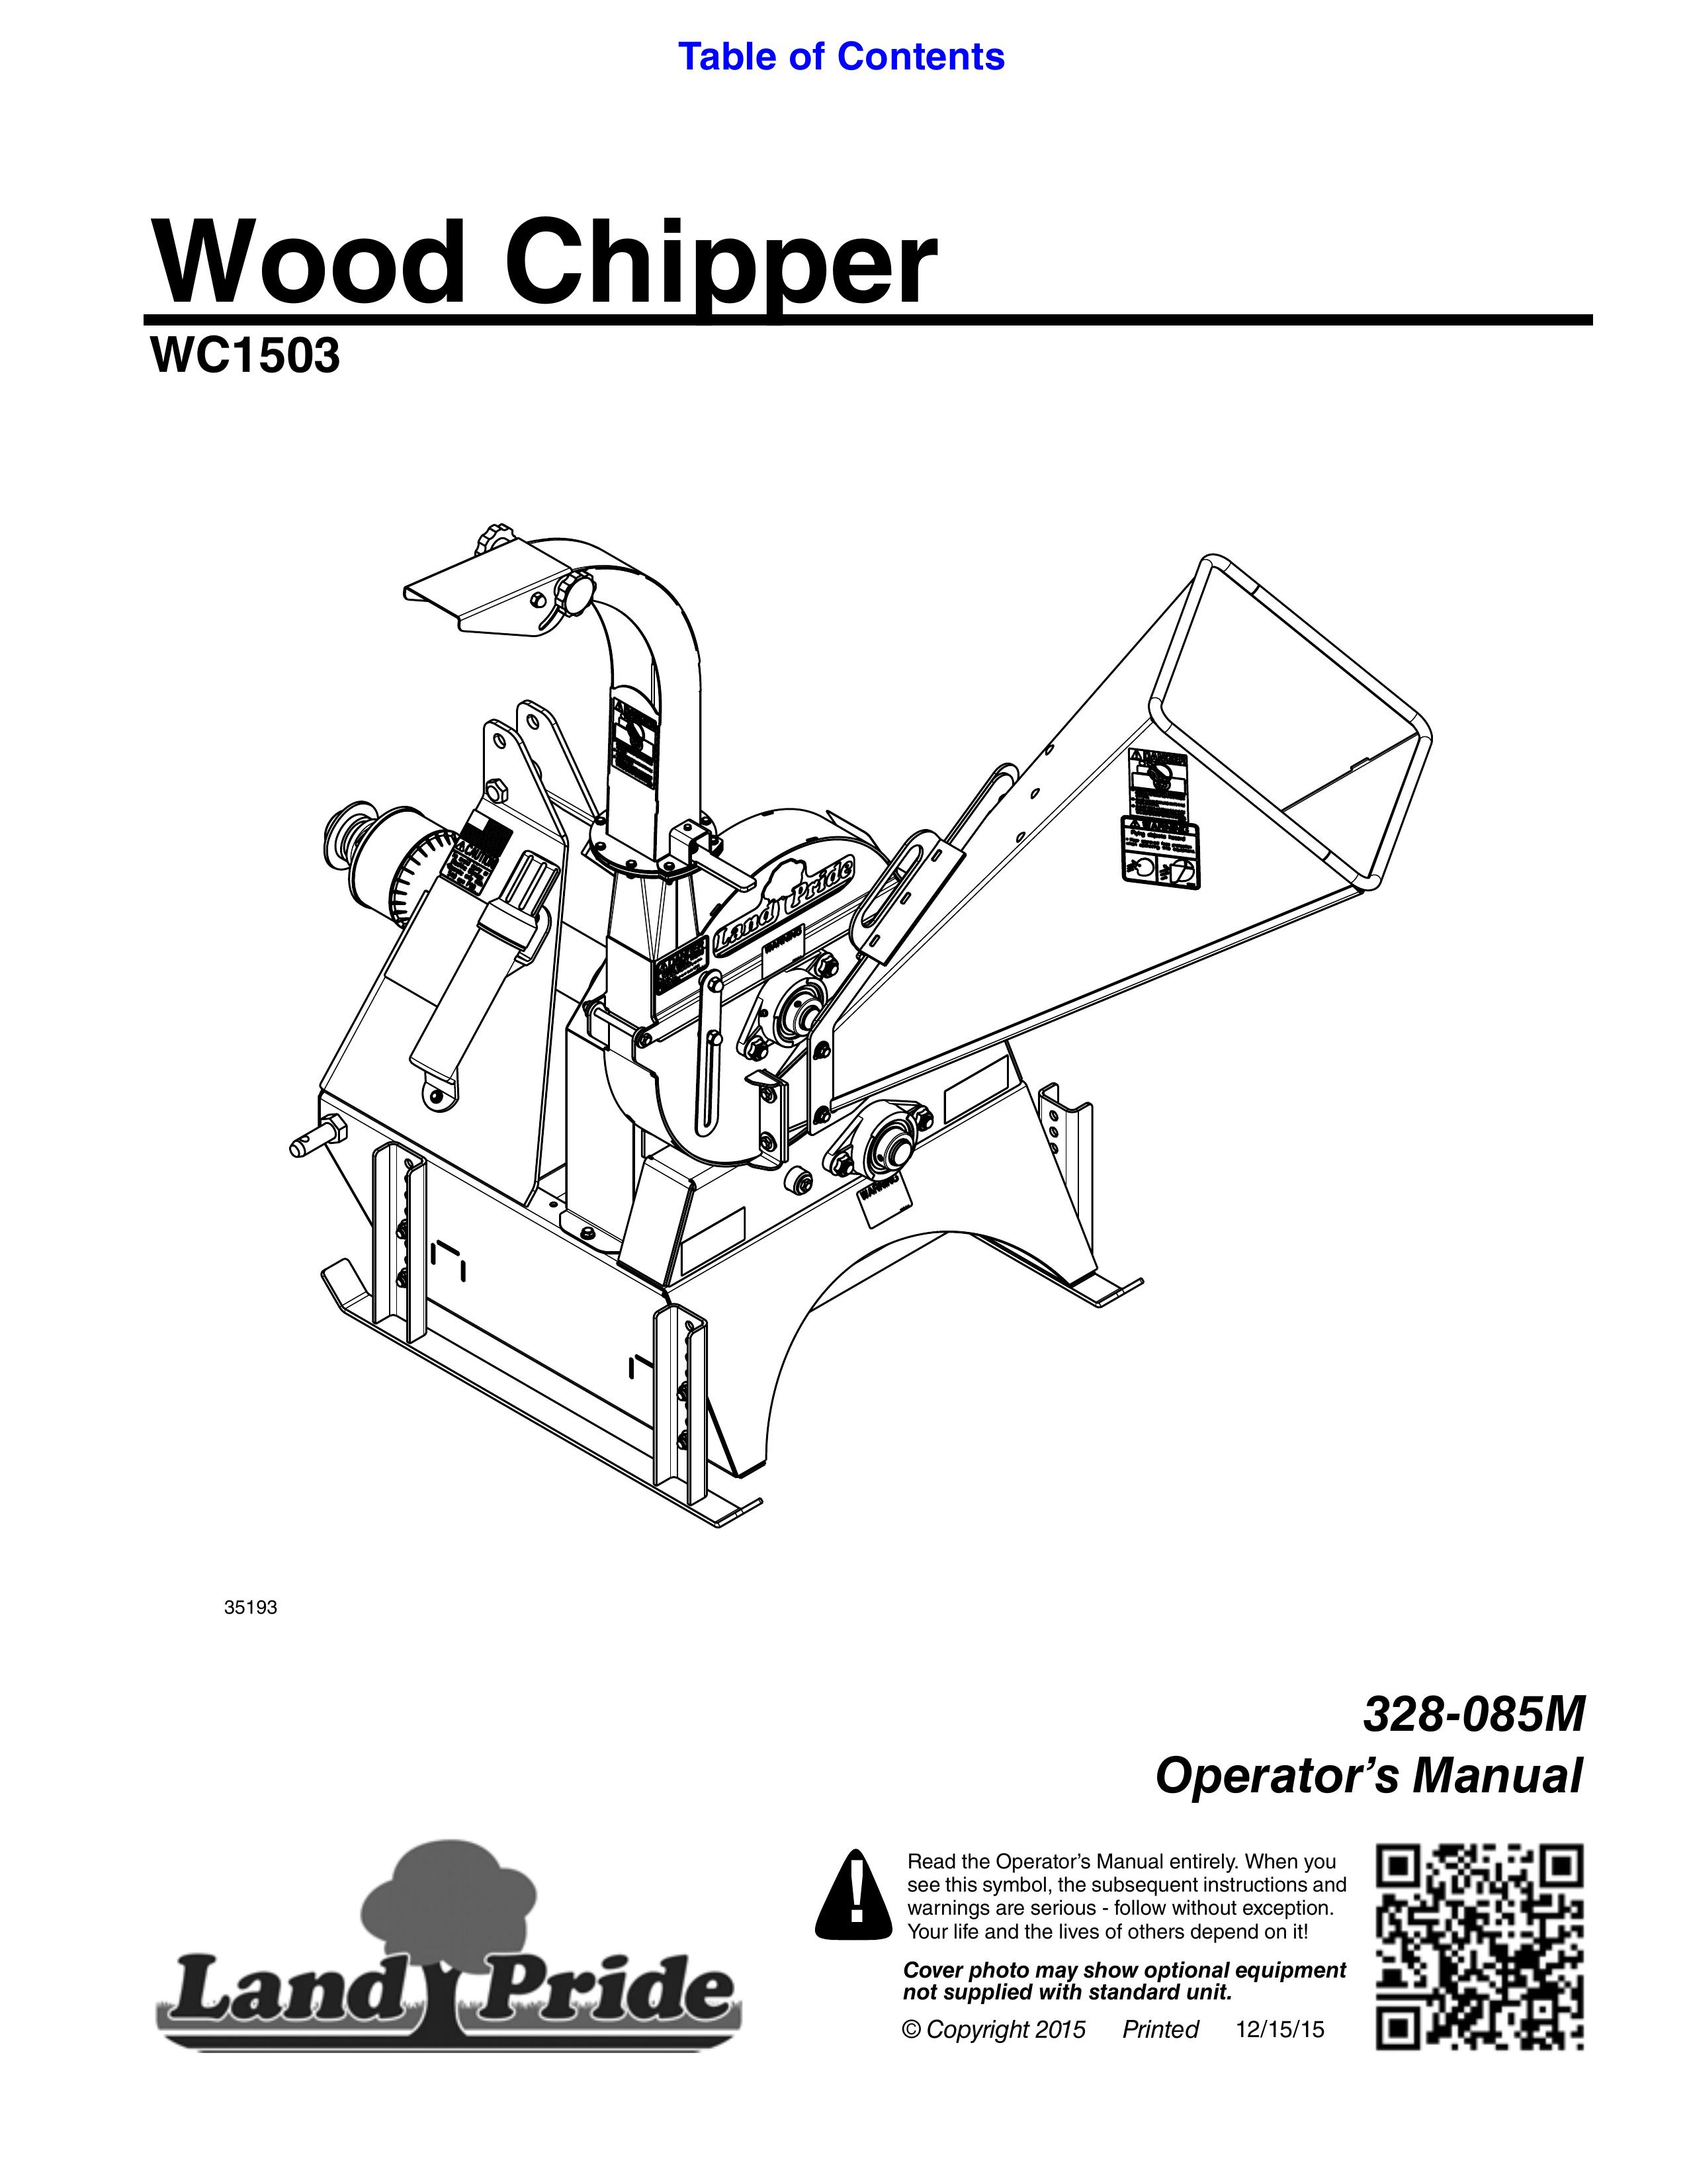 Land Pride WC1503 Chipper User Manual